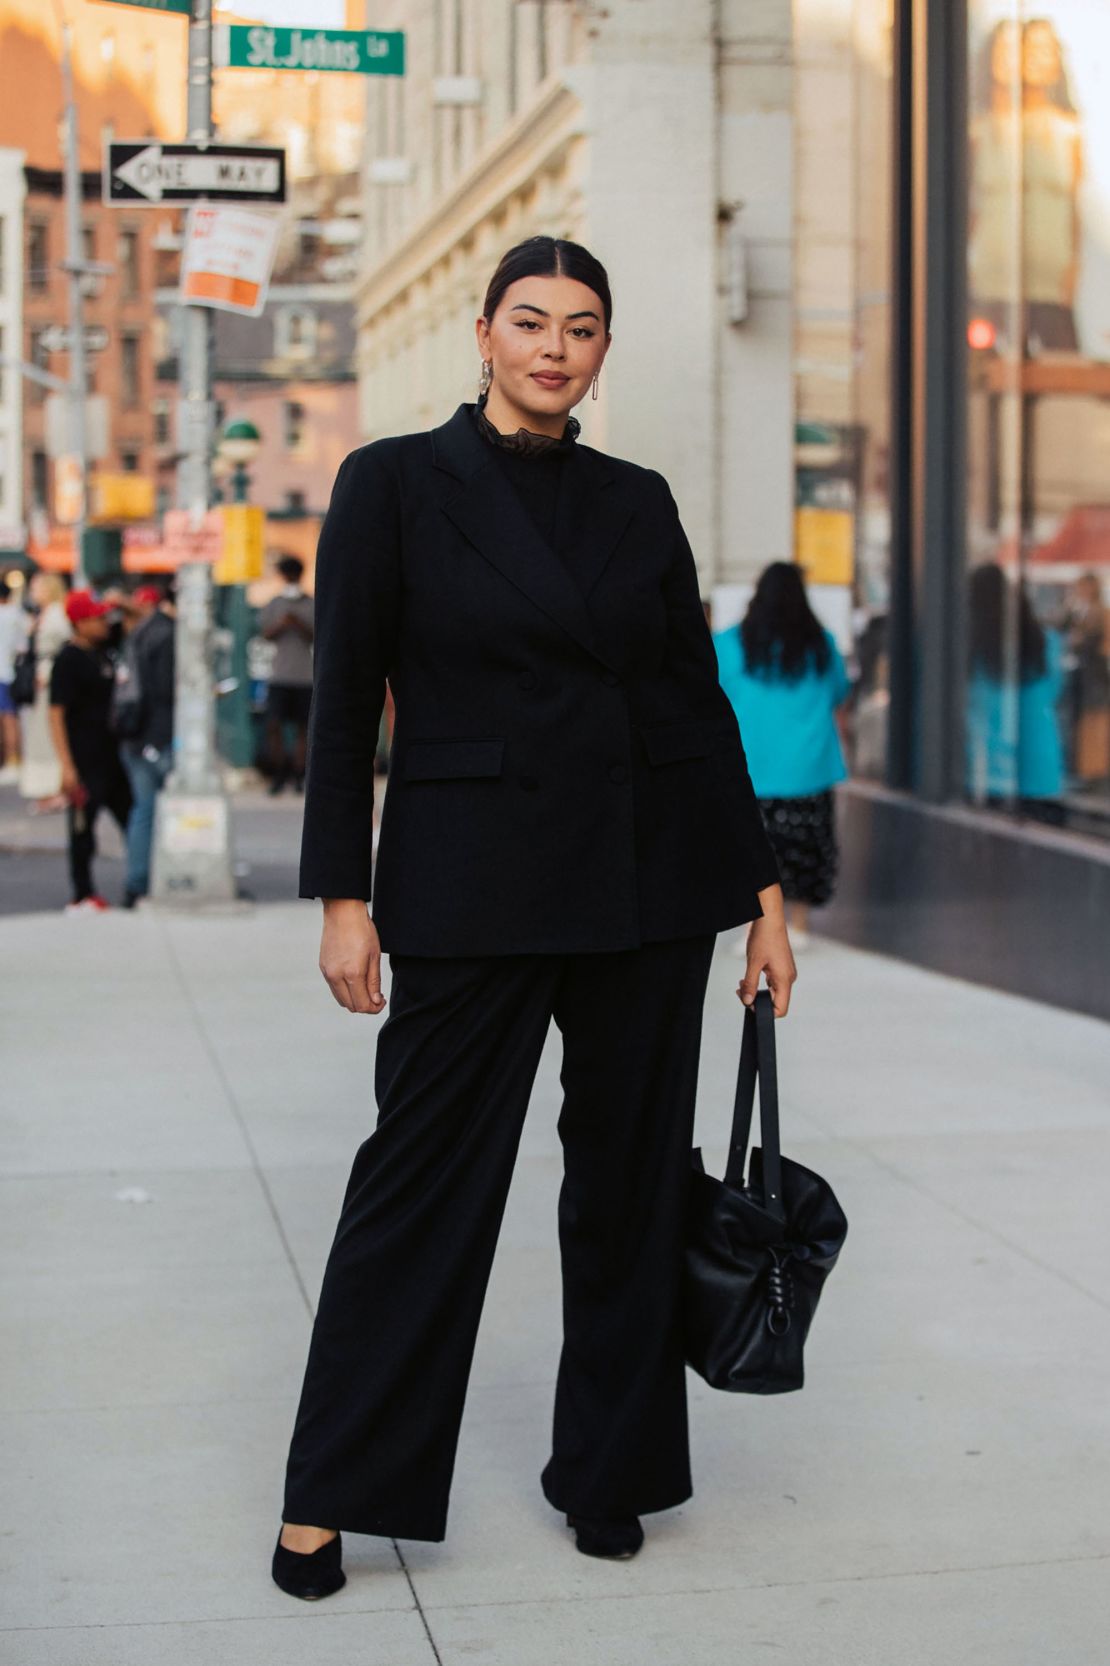 Model, size-inclusivity activist and Henning founder Lauren Chan.